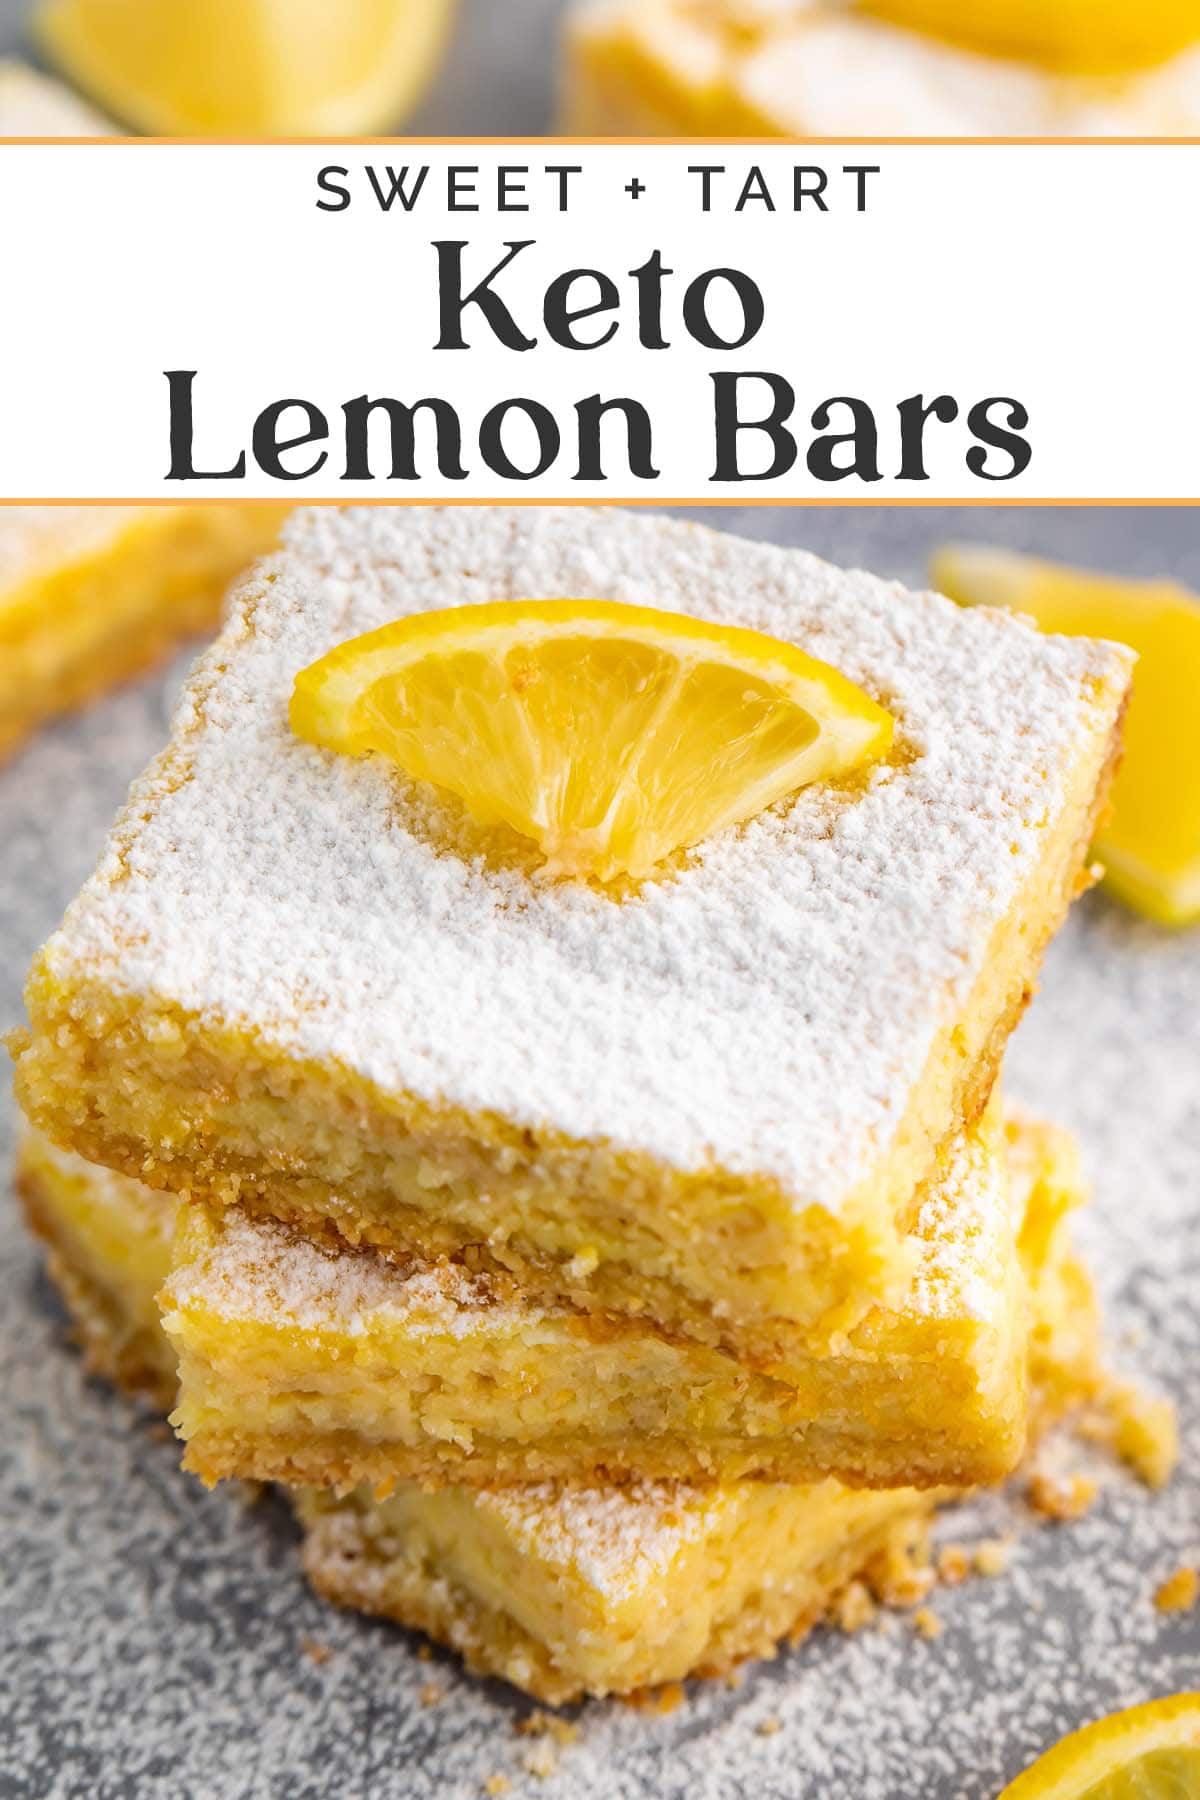 Pin graphic for keto lemon bars.